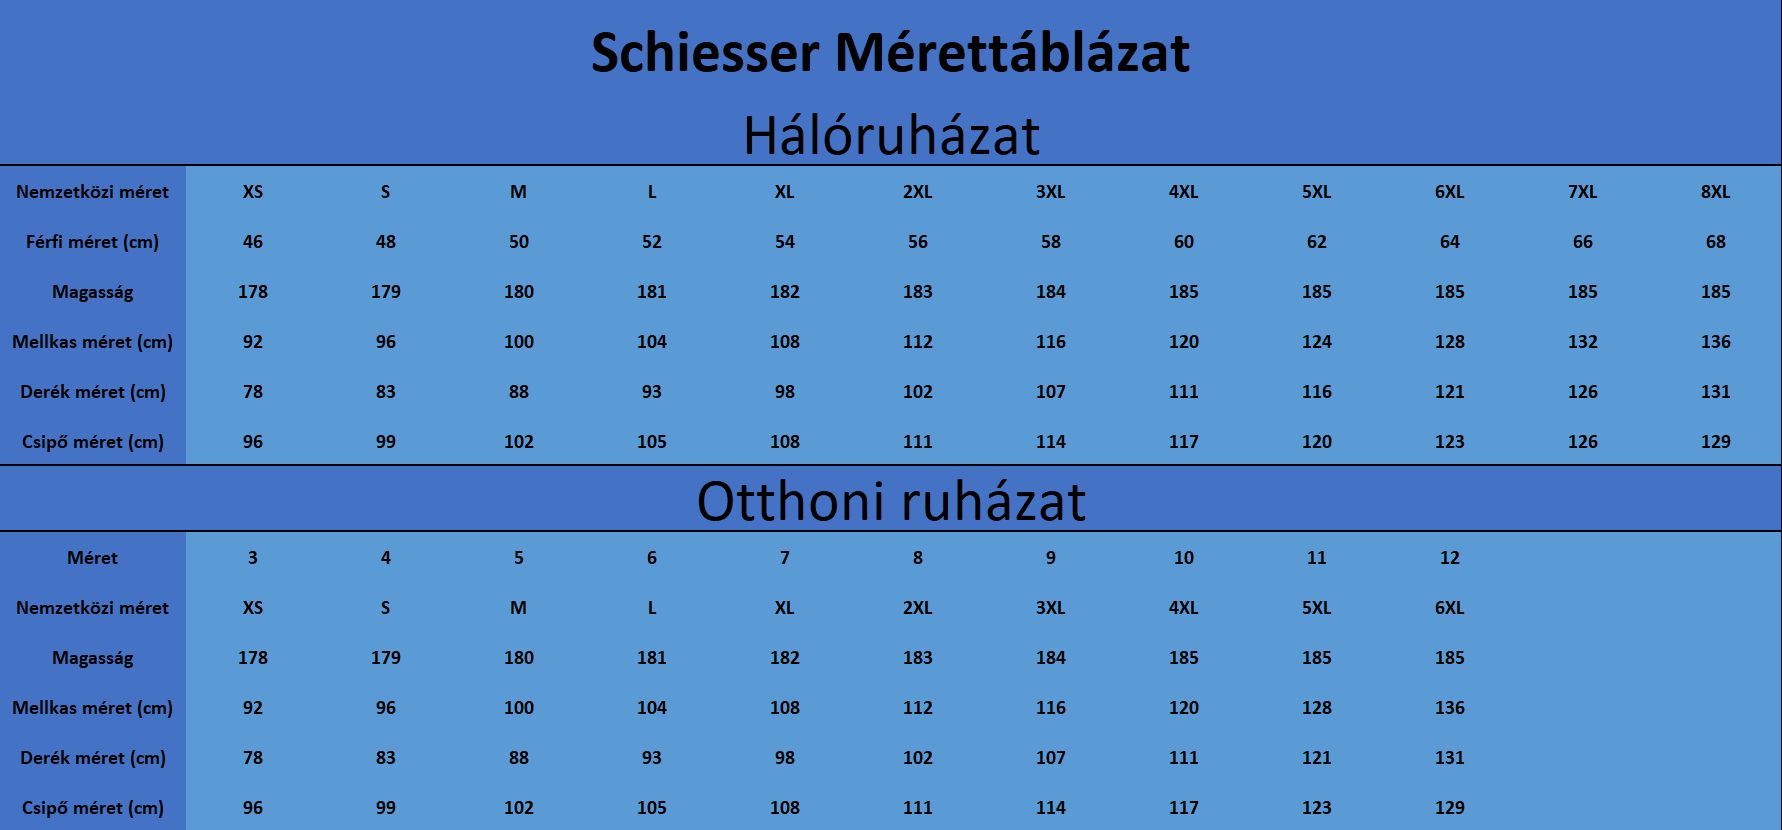 Schiesser mérettáblázat